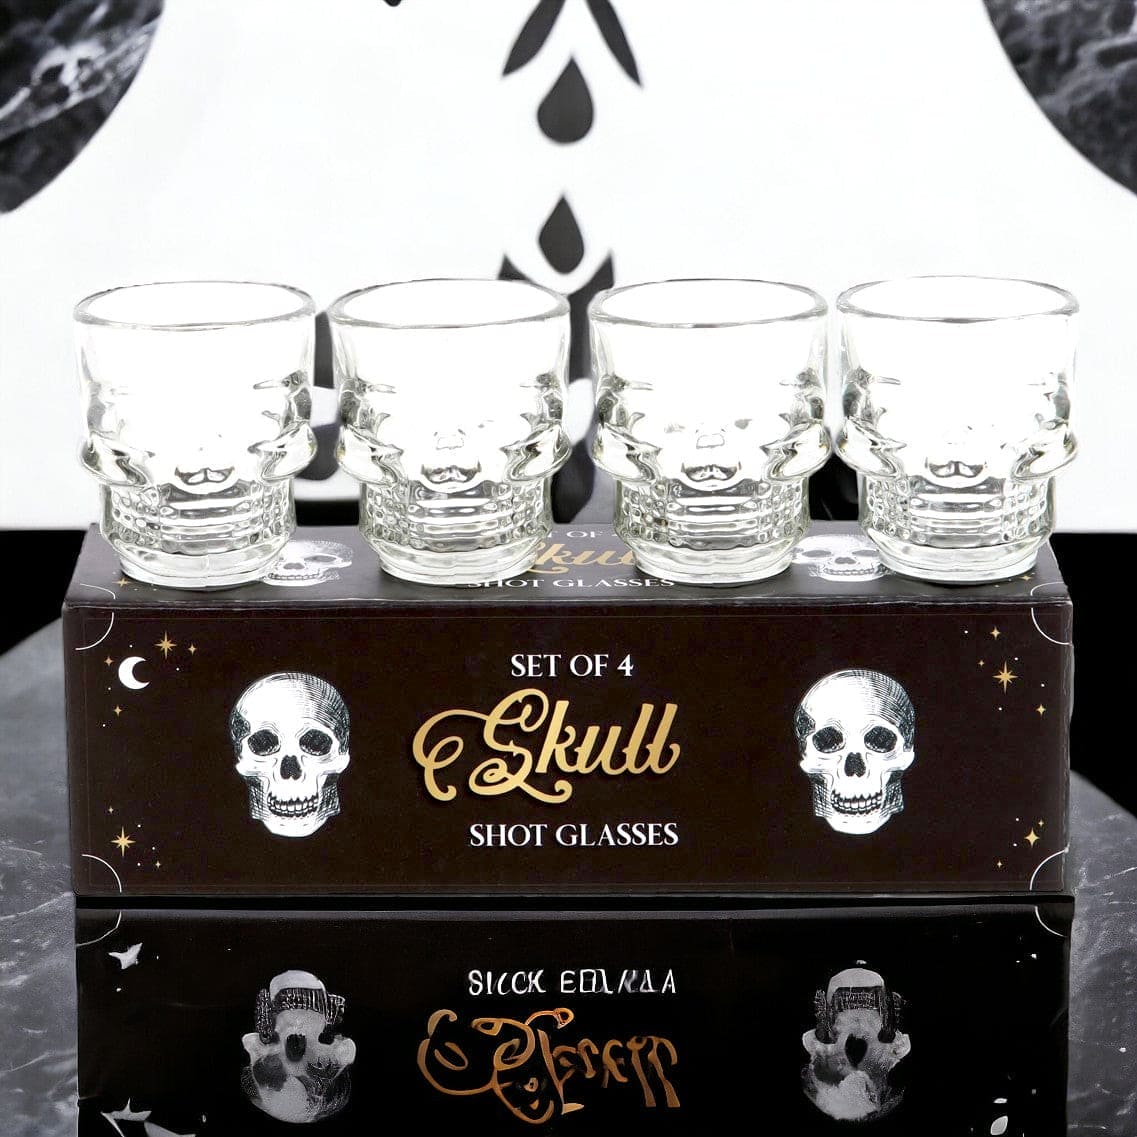 Set of 4 Skull Shot Glasses - Shot Glasses by Puckator